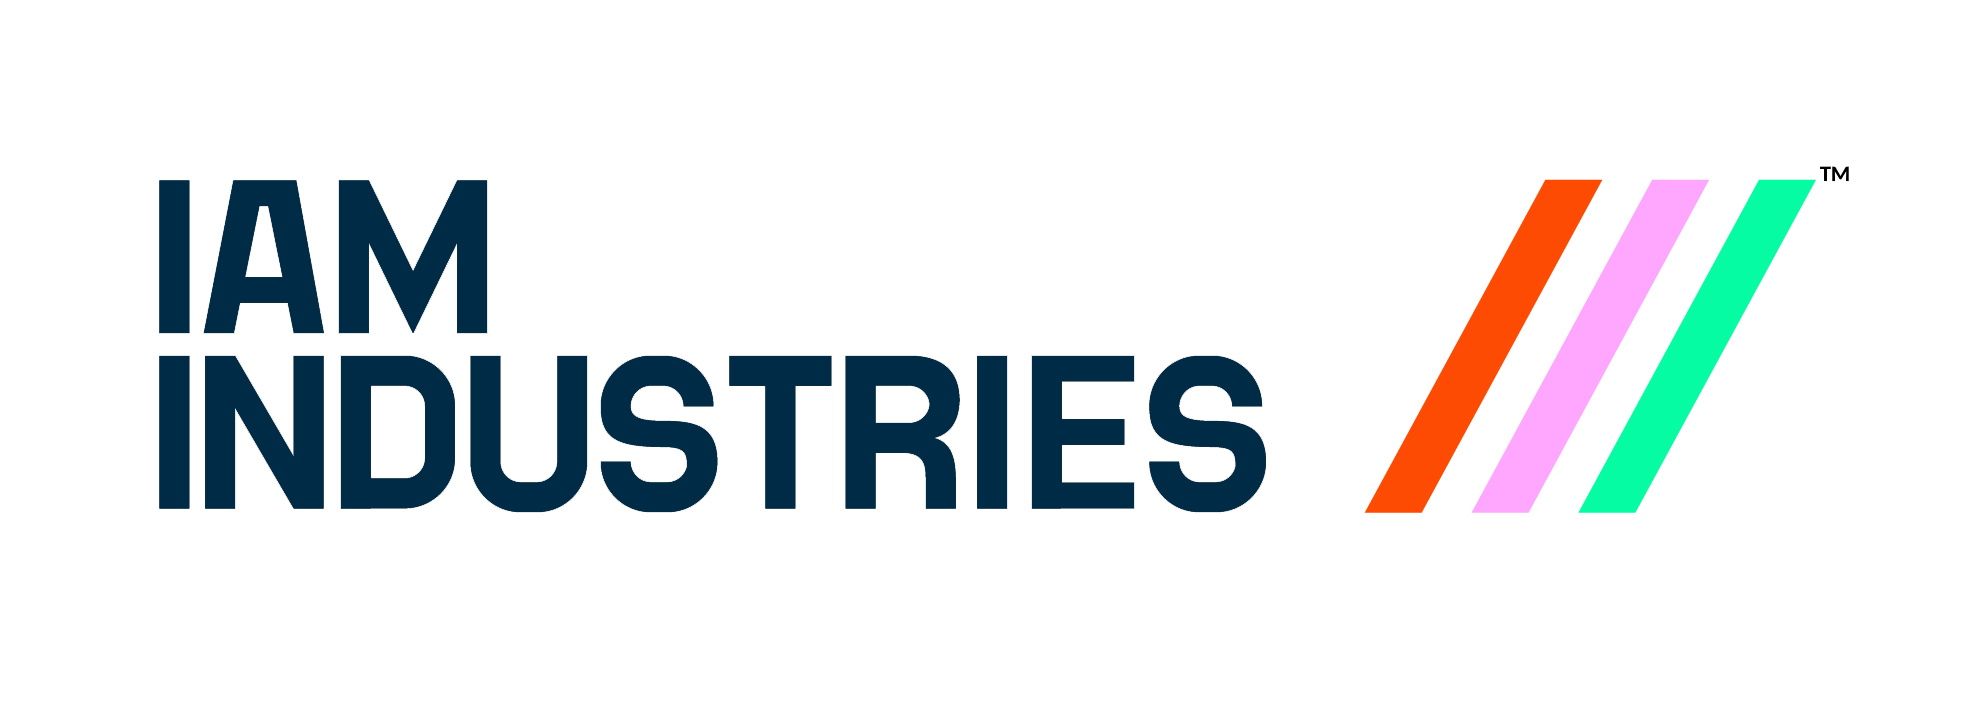 IAM_Industries Logo